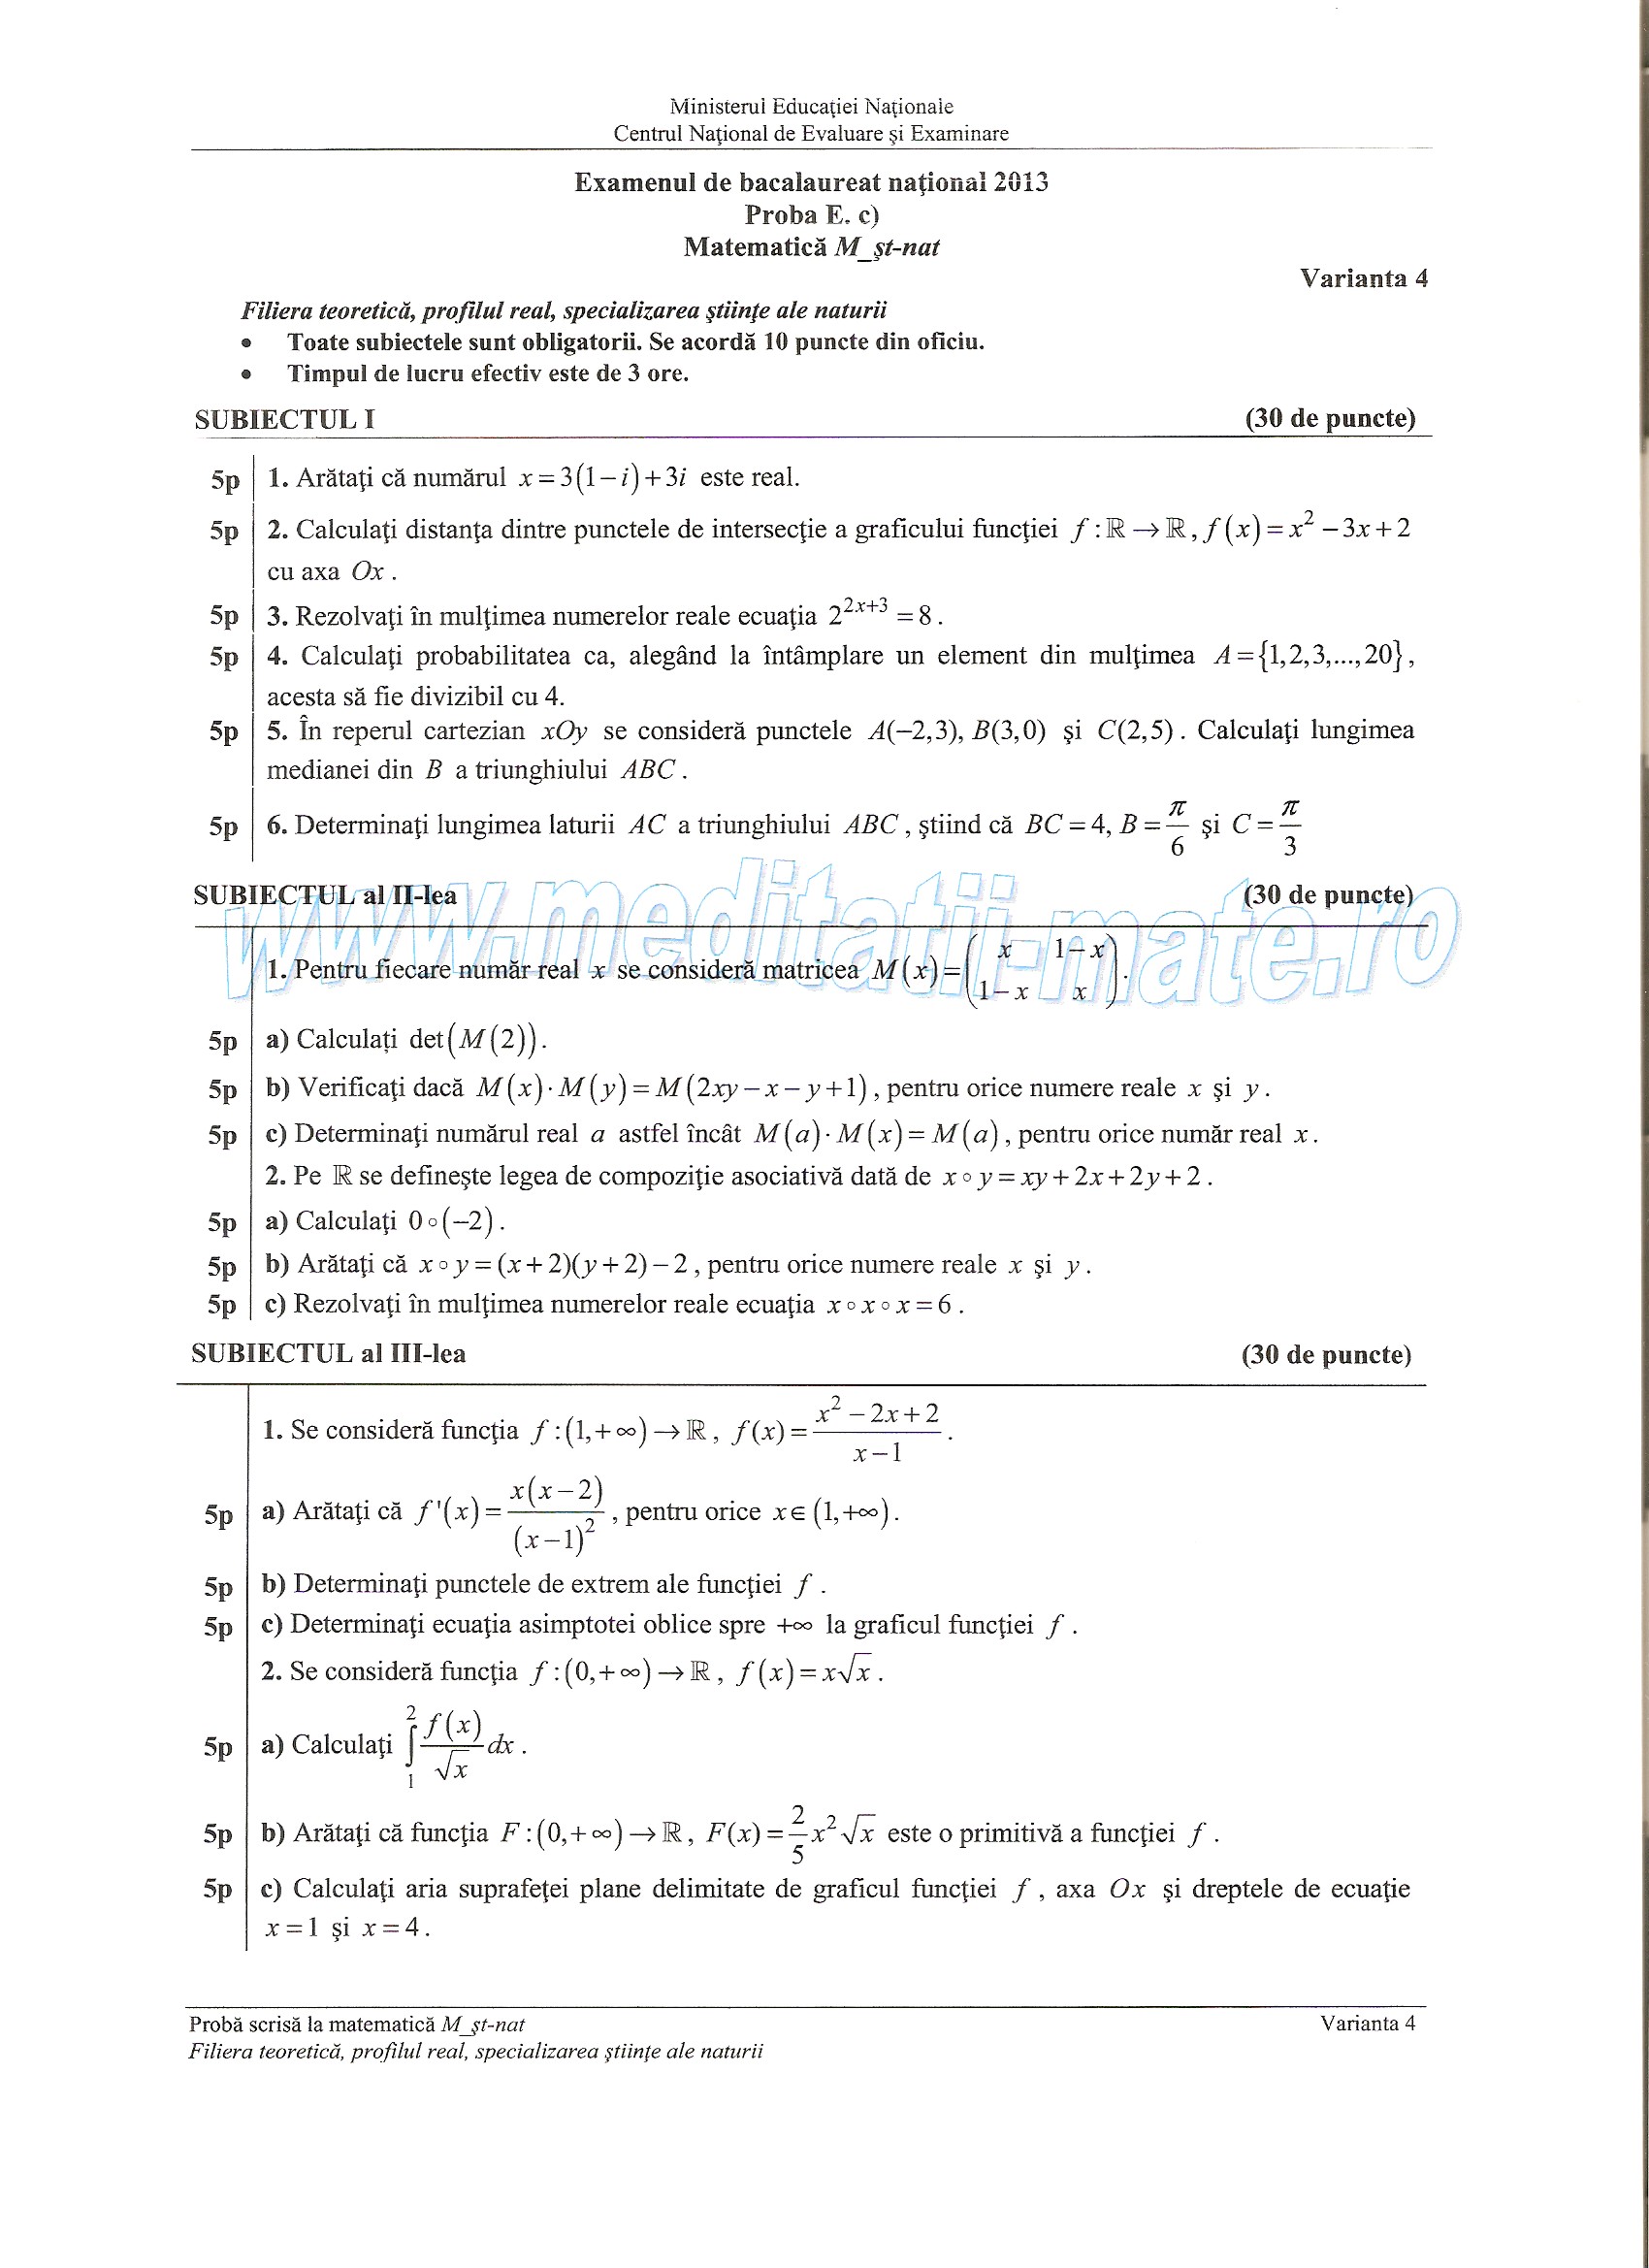 Subiect de Matematica pentru examenul de bacalaureat, profil M, Varianta 4